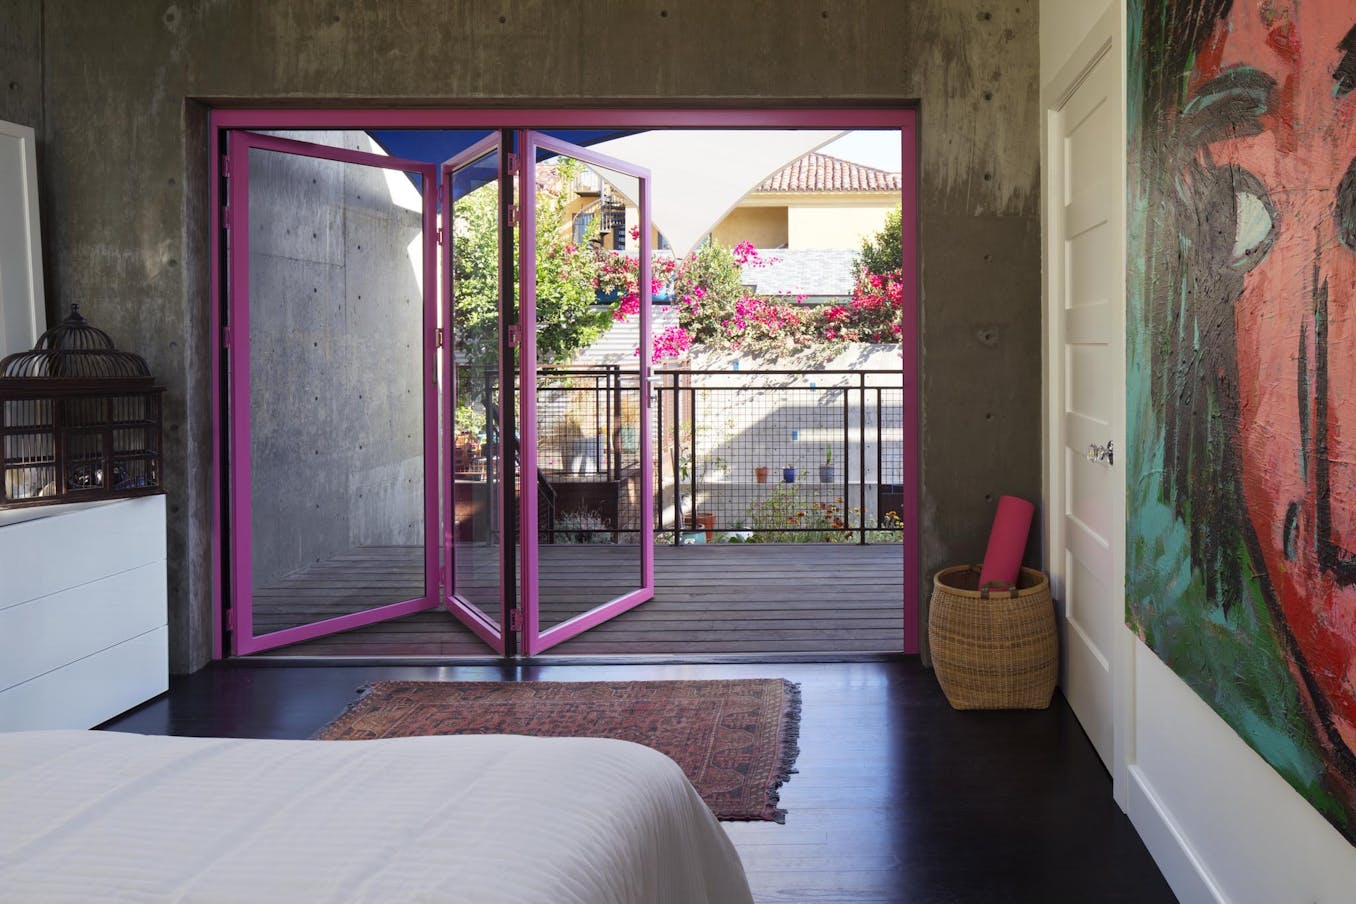 Bedroom folding glass walls - opening interior